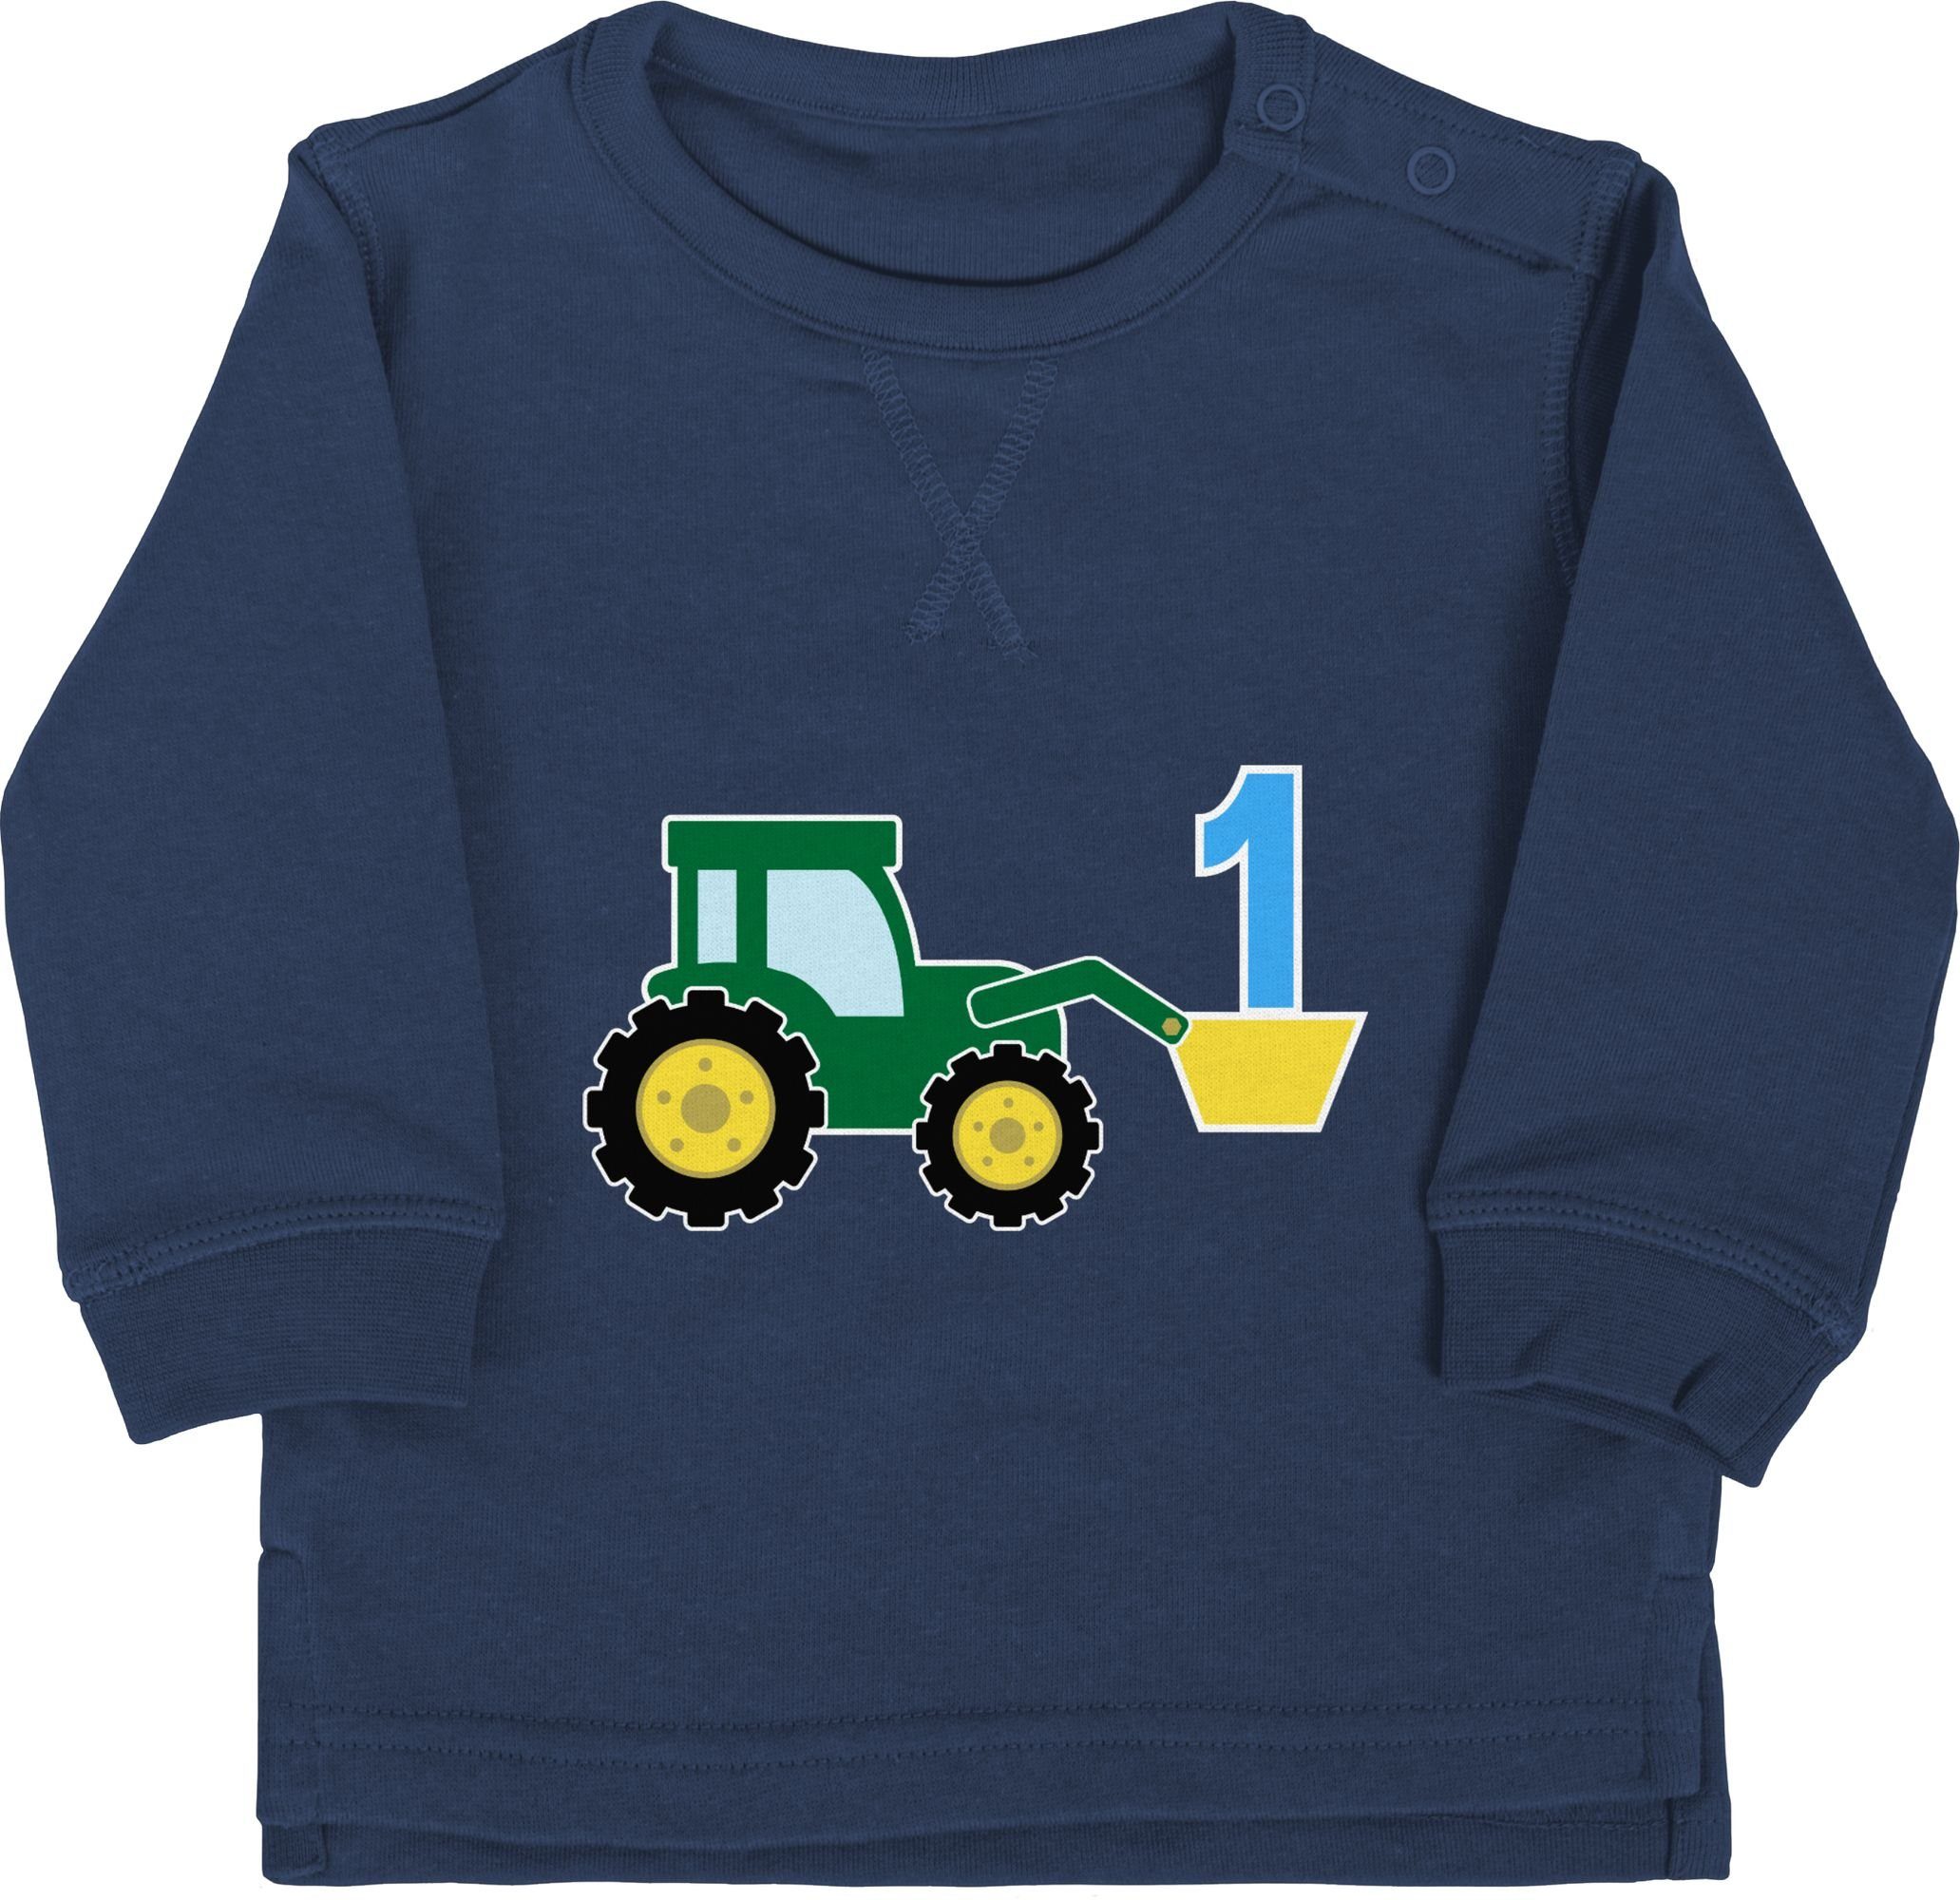 Shirtracer 1. Traktor Sweatshirt Blau 1 Geburtstag Navy Ernster